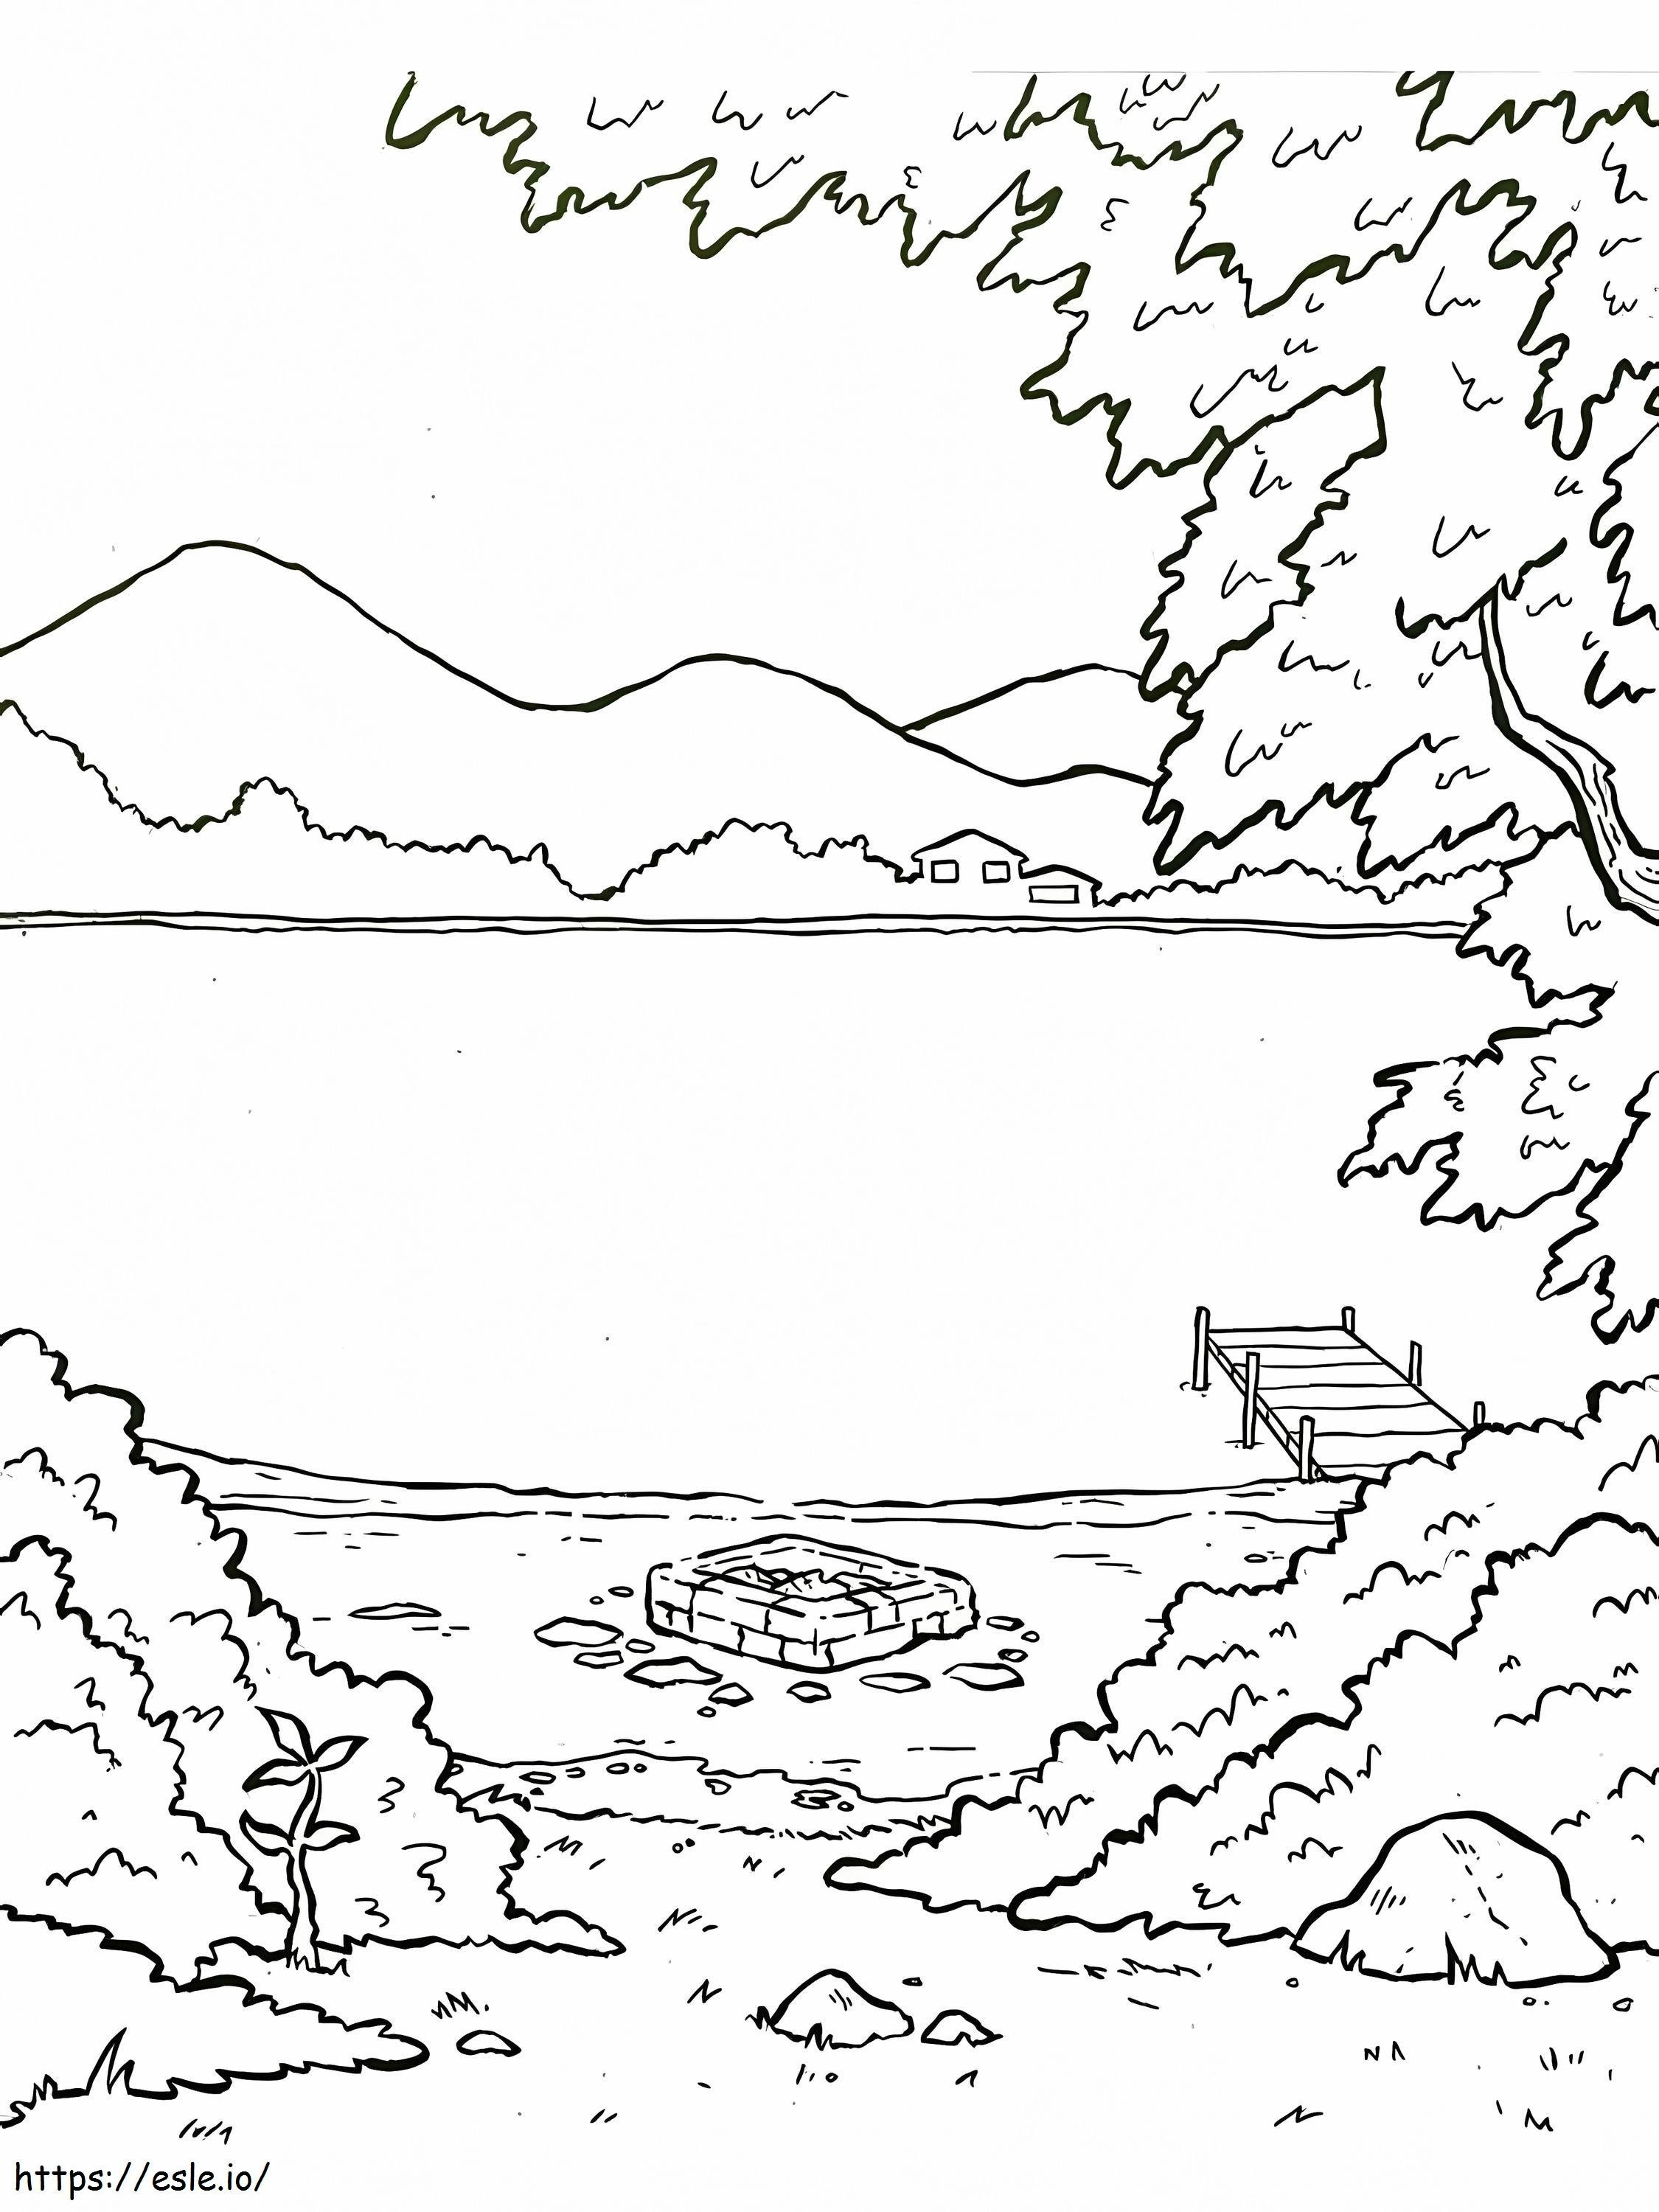 Lake Landscape coloring page